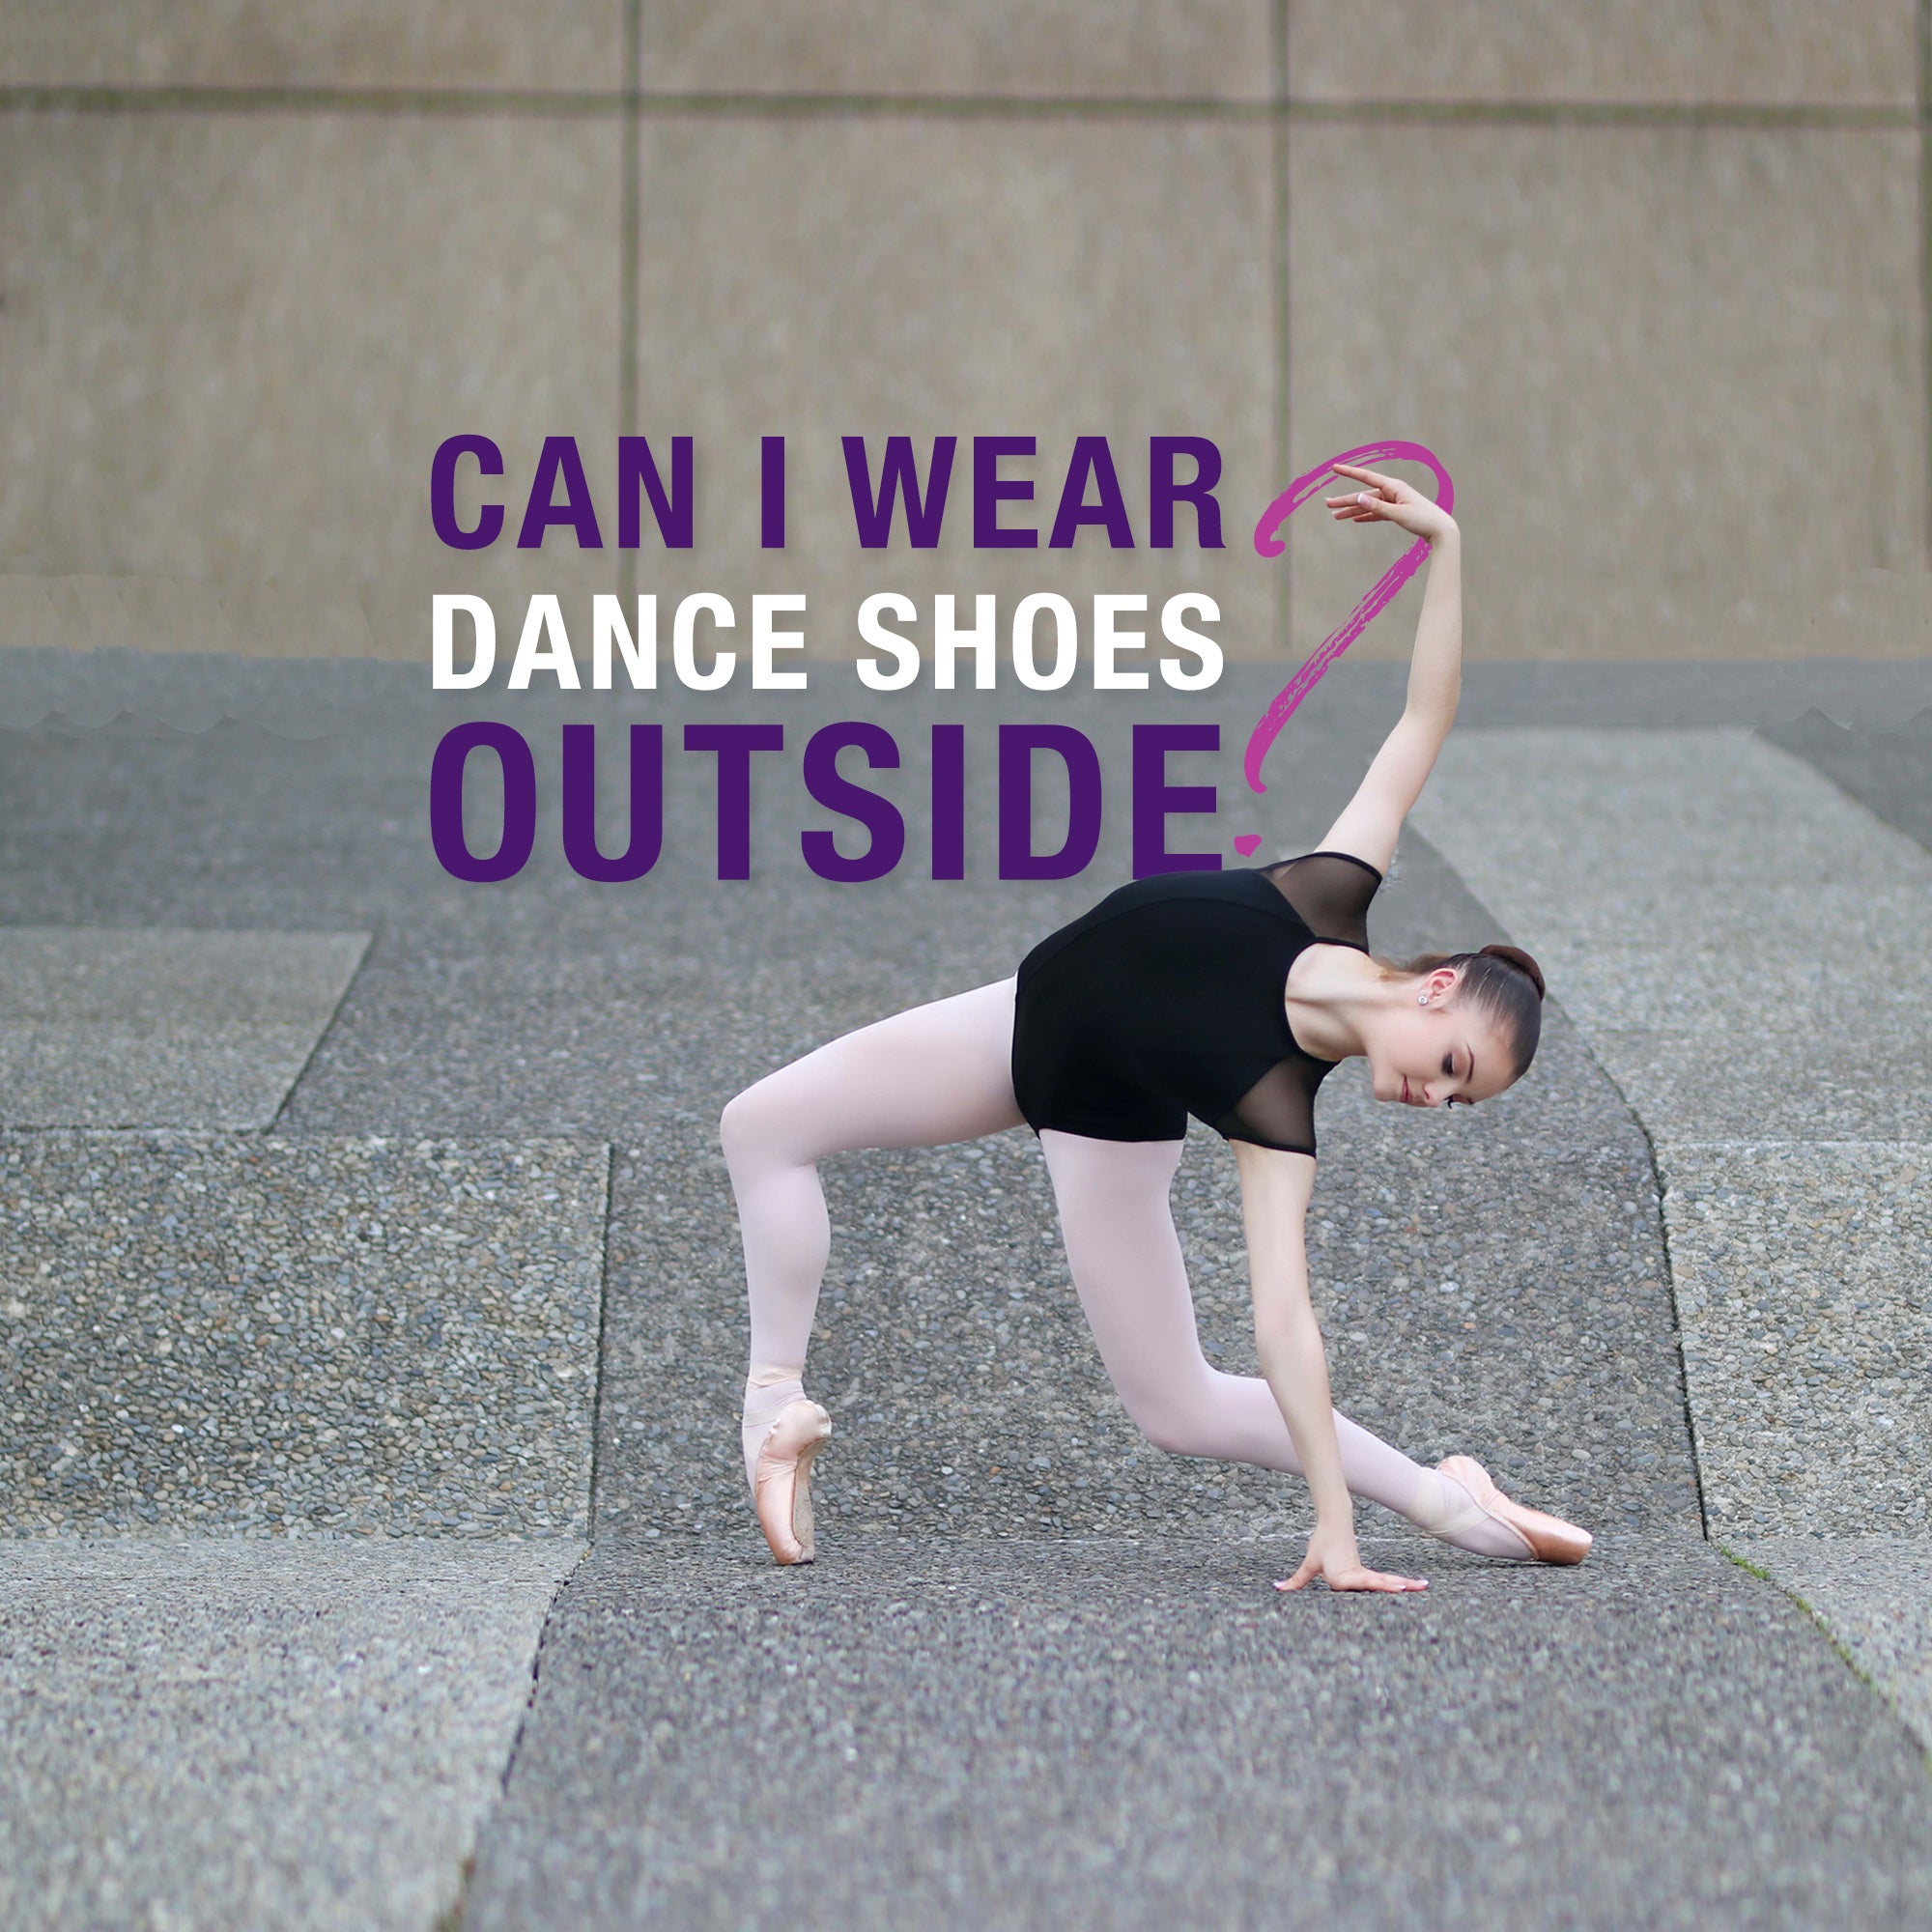 THE DANCESOCKS - Over Sneaker Socks for Dancing. Protect knees & ankles.  Reduce dance injuries. 